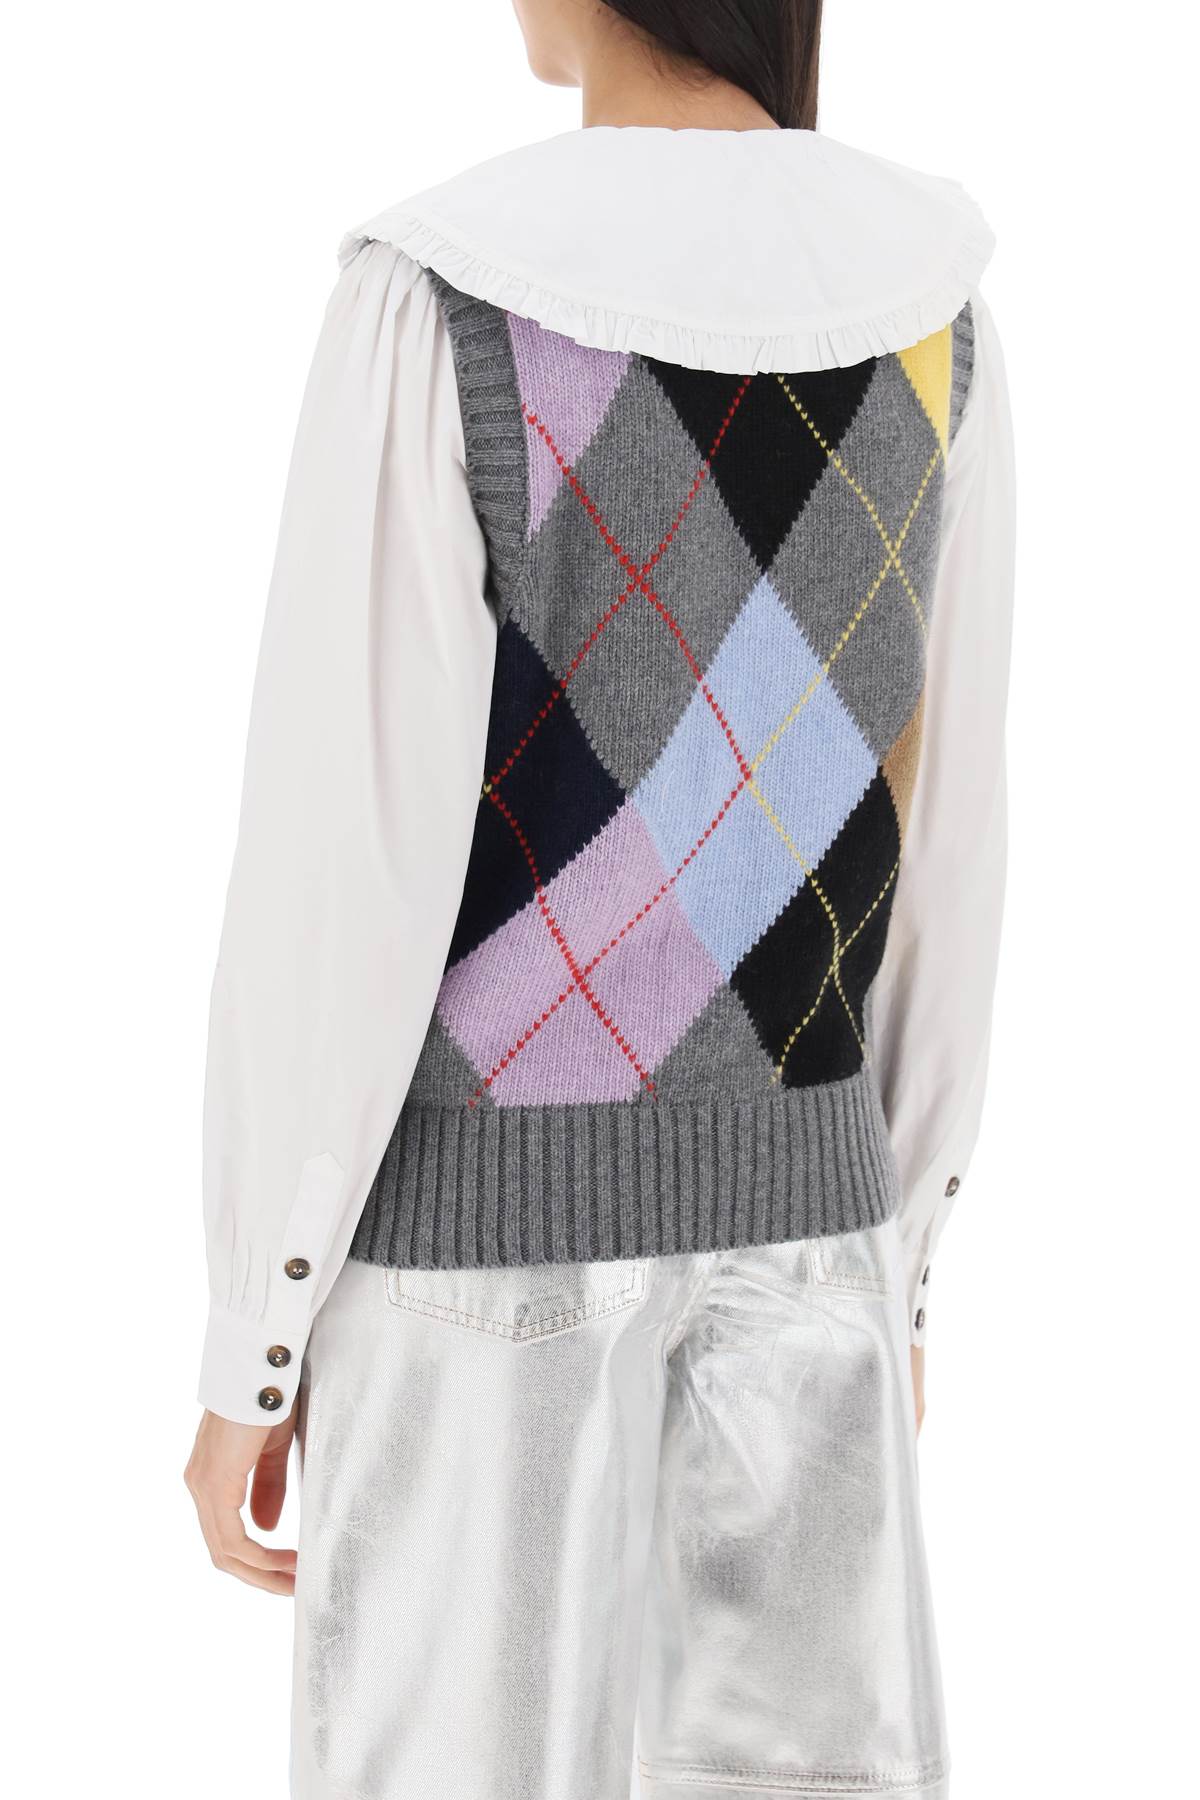 GANNI Harlequin Wool Mix Knit Vest GREY